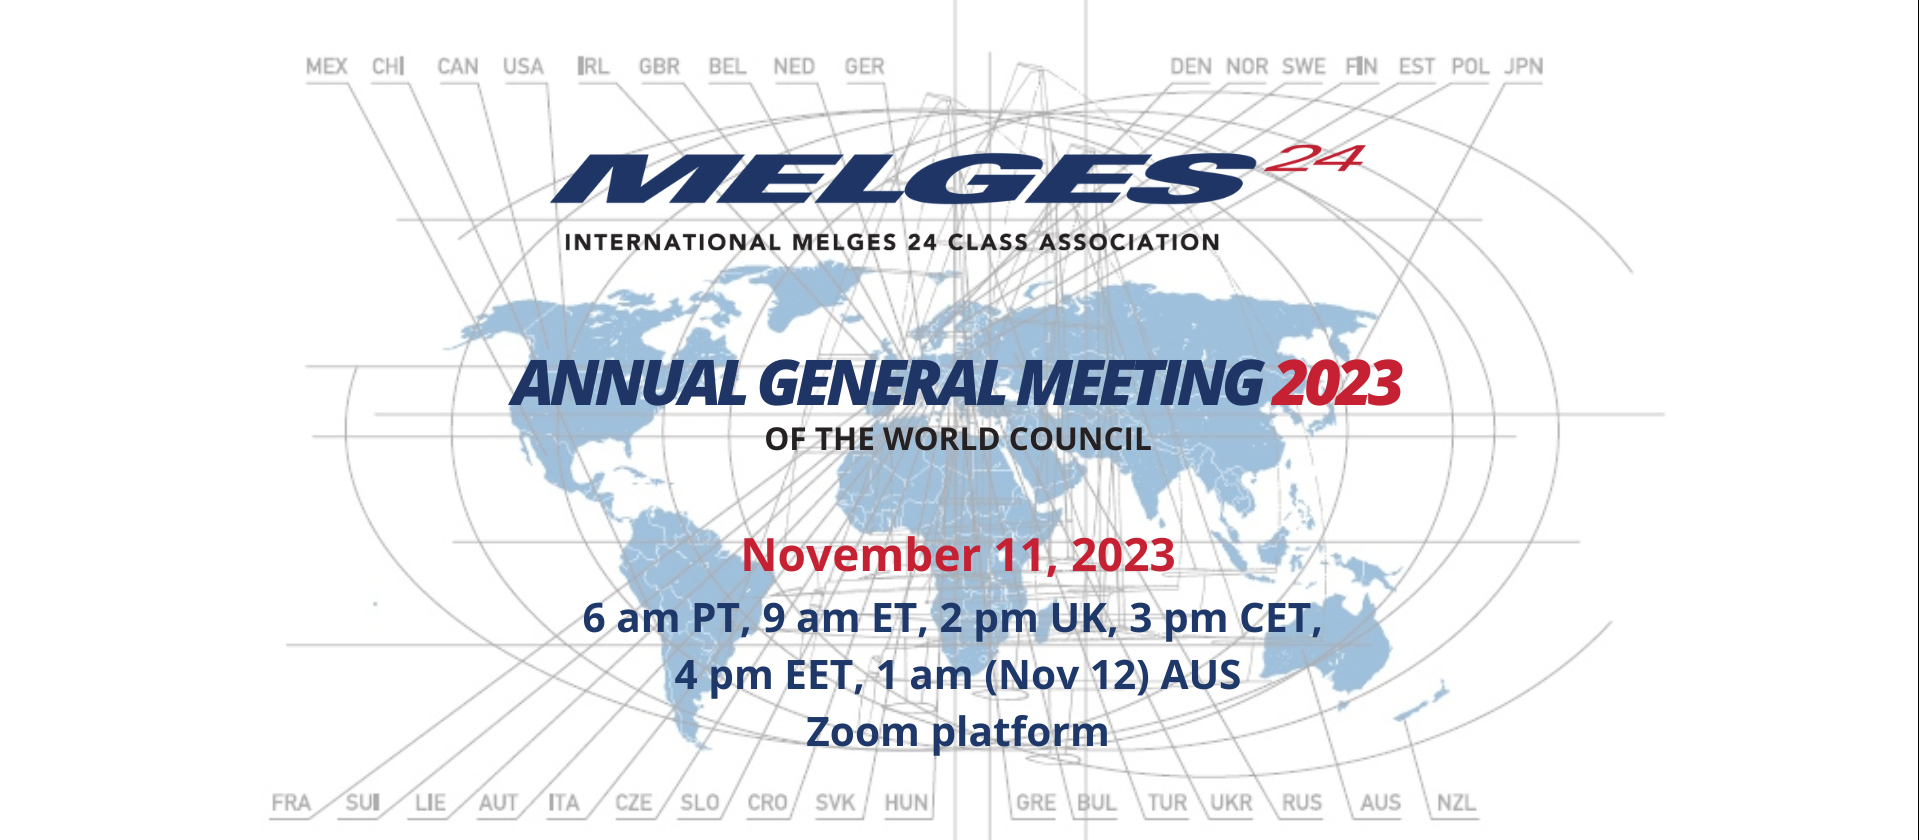 2023 International Melges 24 World Council Annual General Meeting